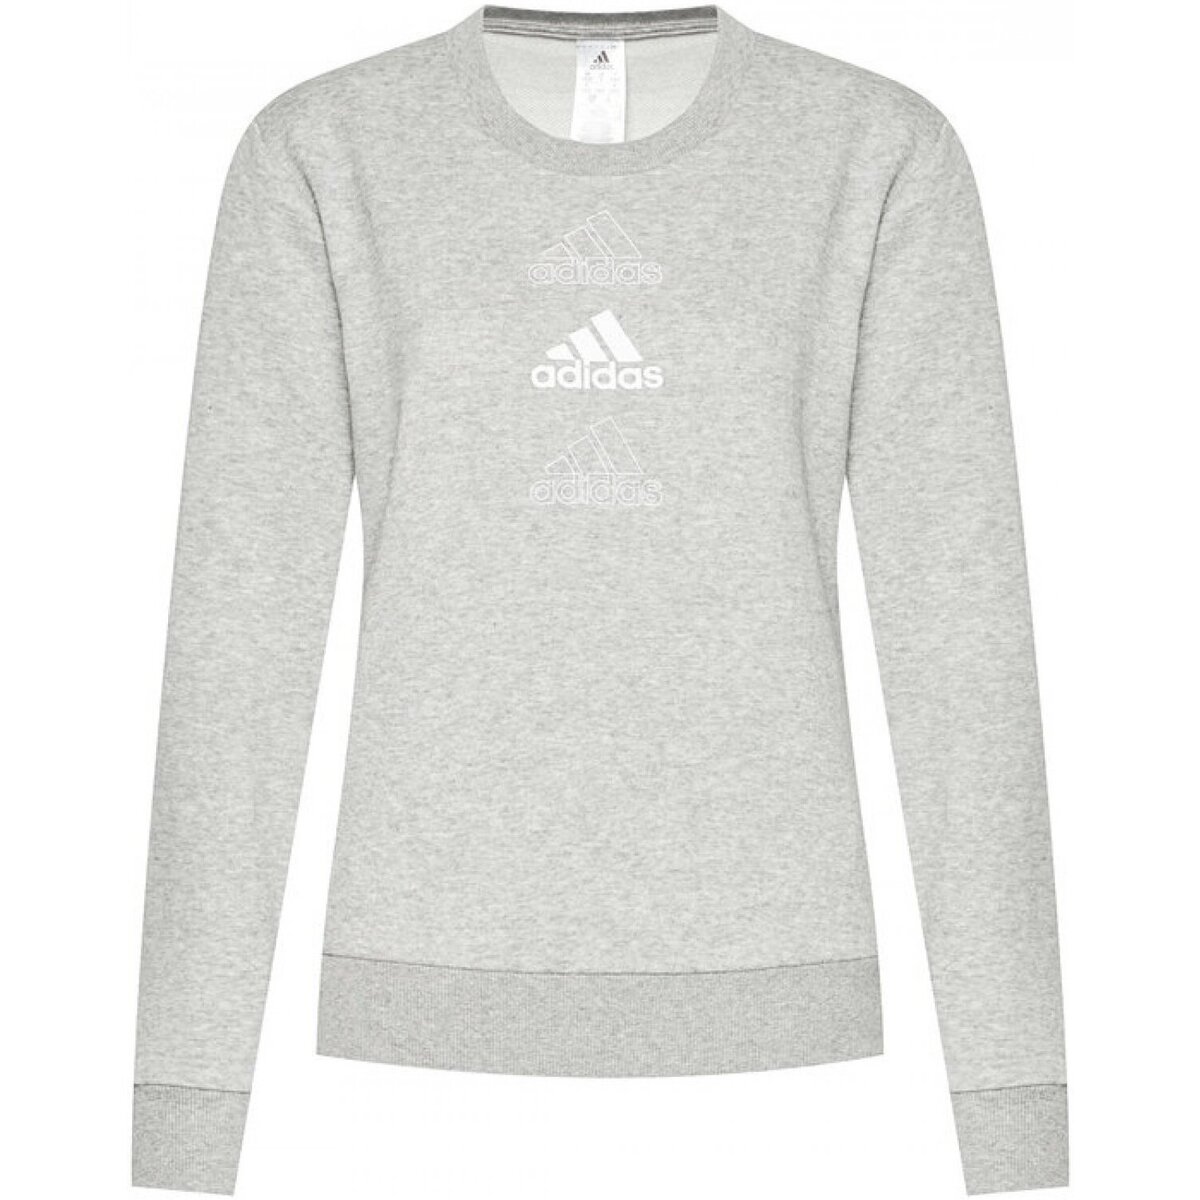 textil Dame Sweatshirts adidas Originals GL1410 Grå